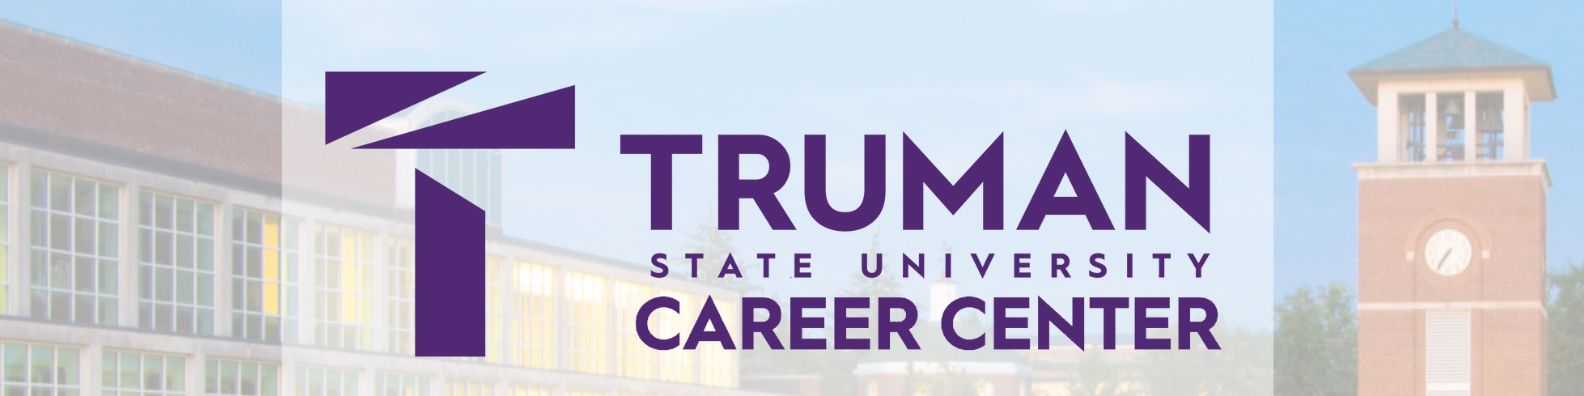 Truman State University Career Center